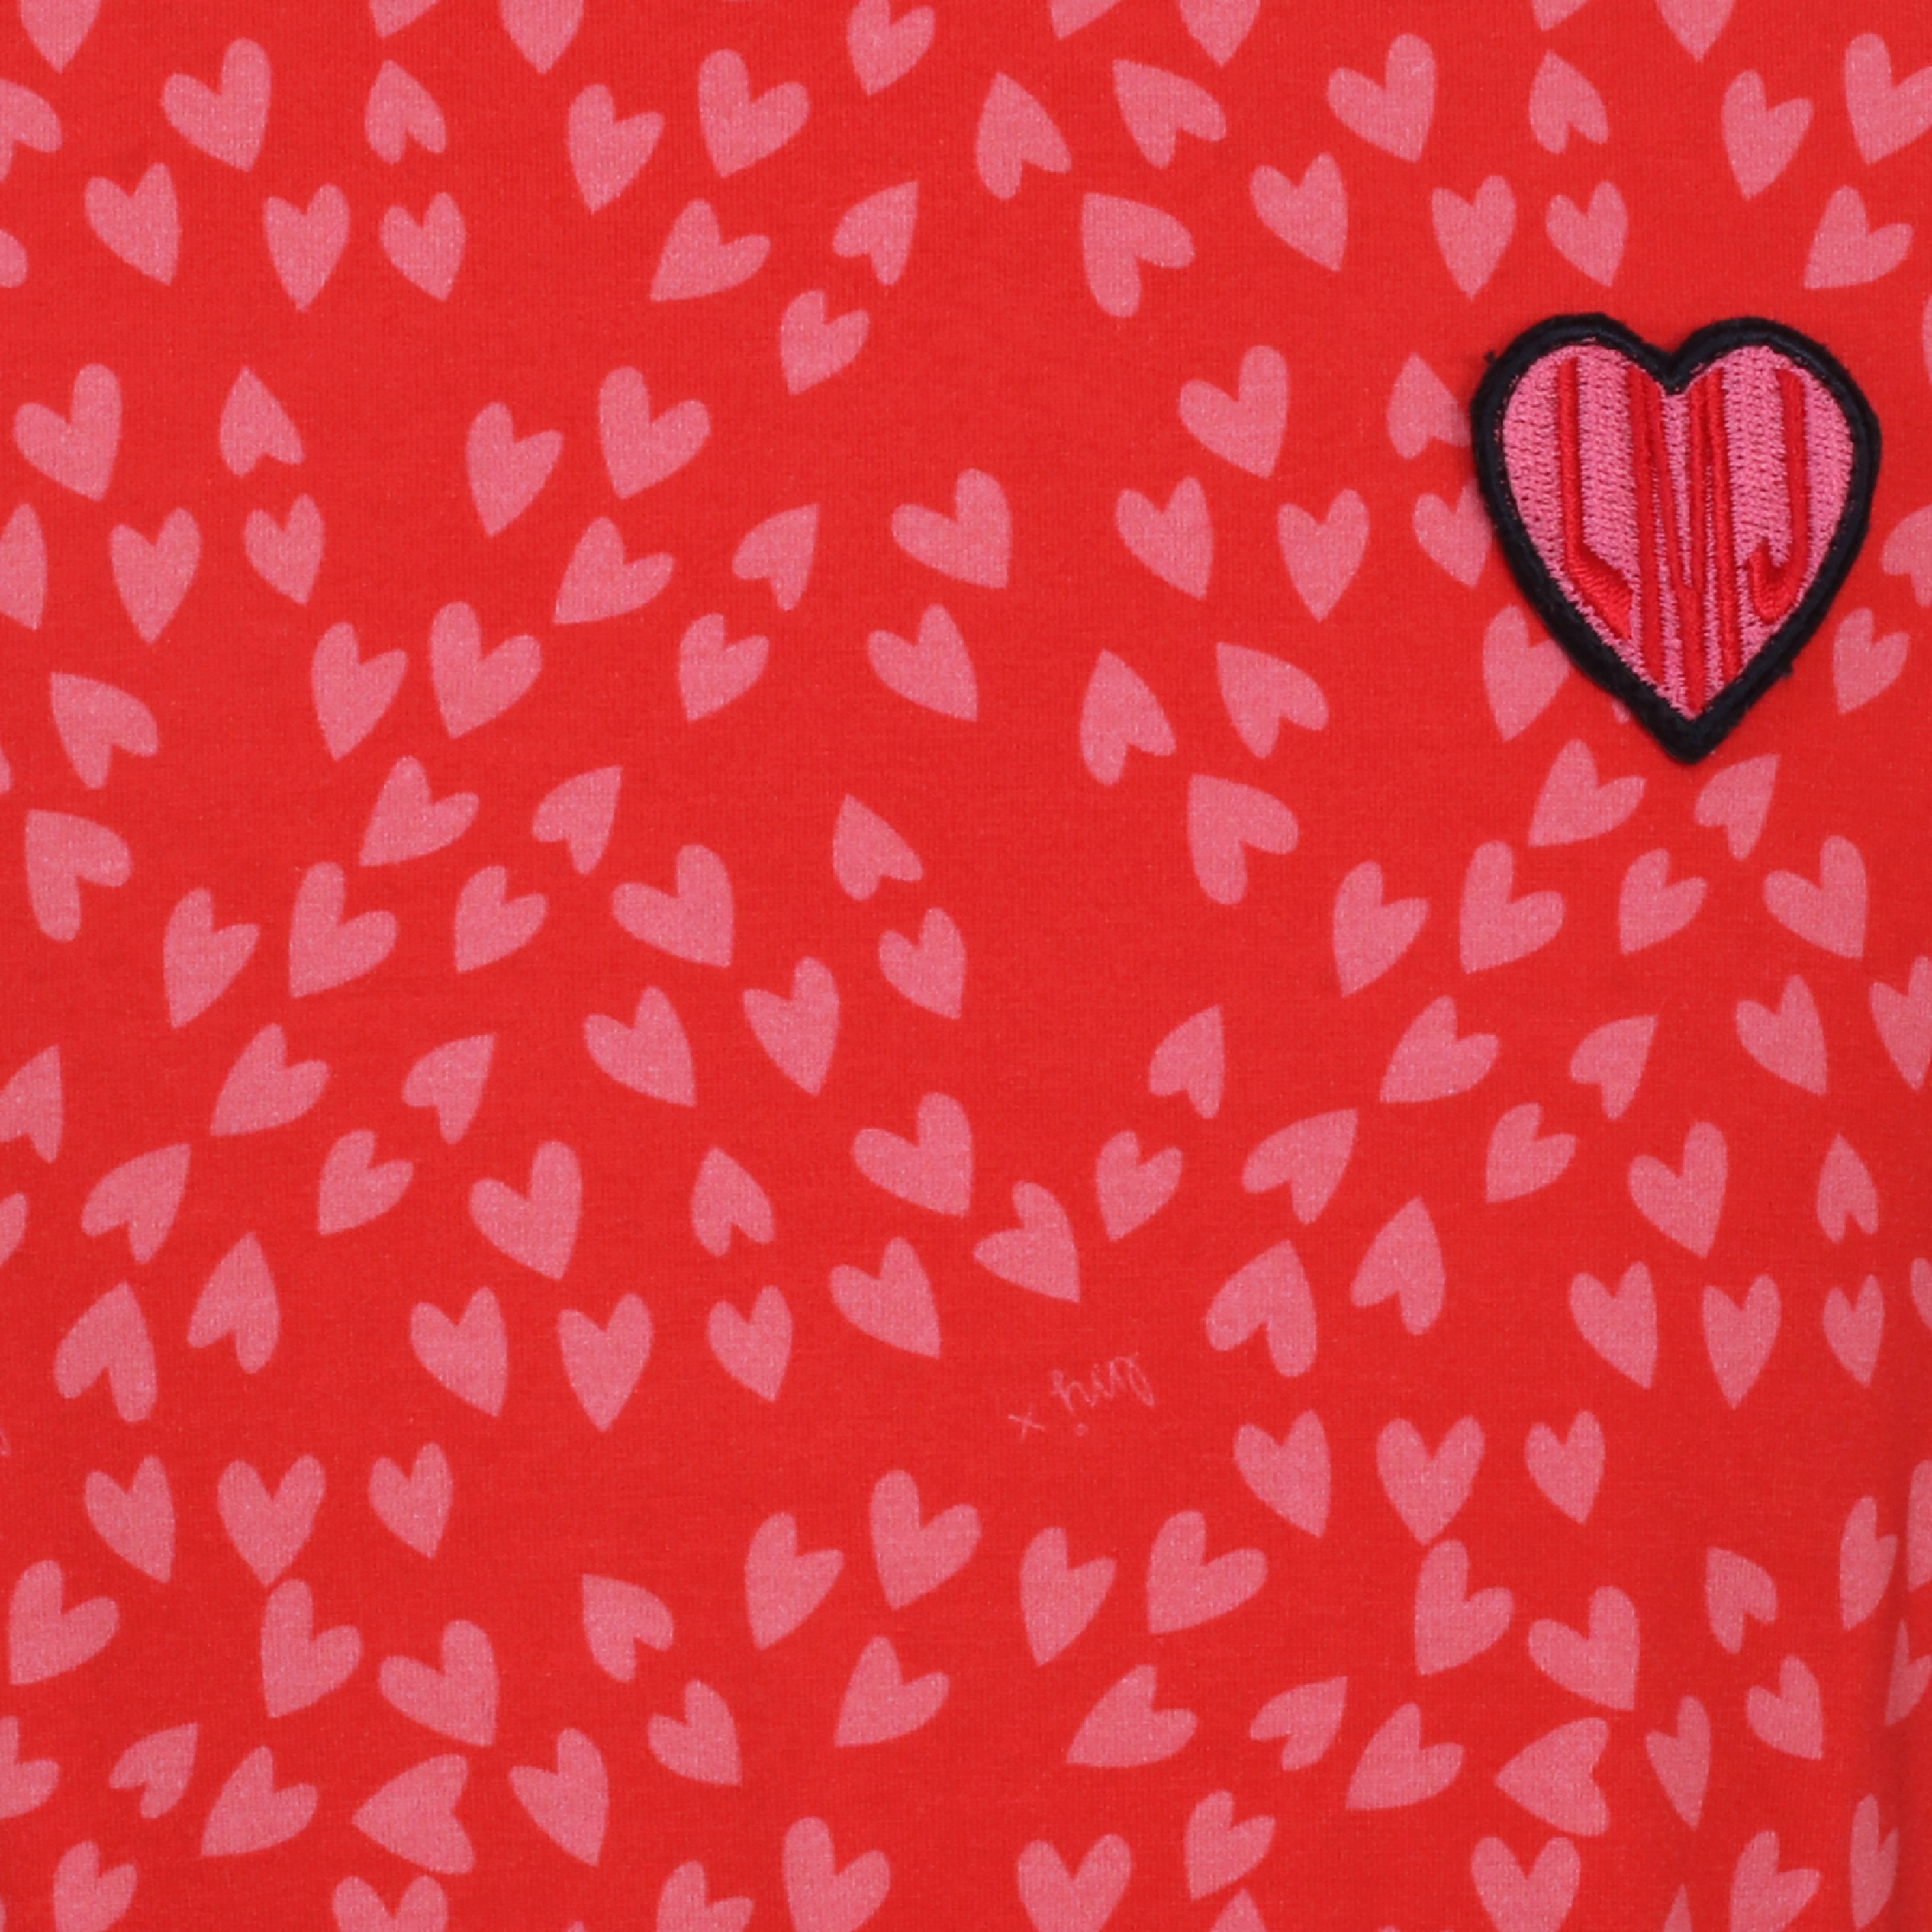 Meisjes Dress Heart van Miss Juliette in de kleur Rood in maat 146, 152.